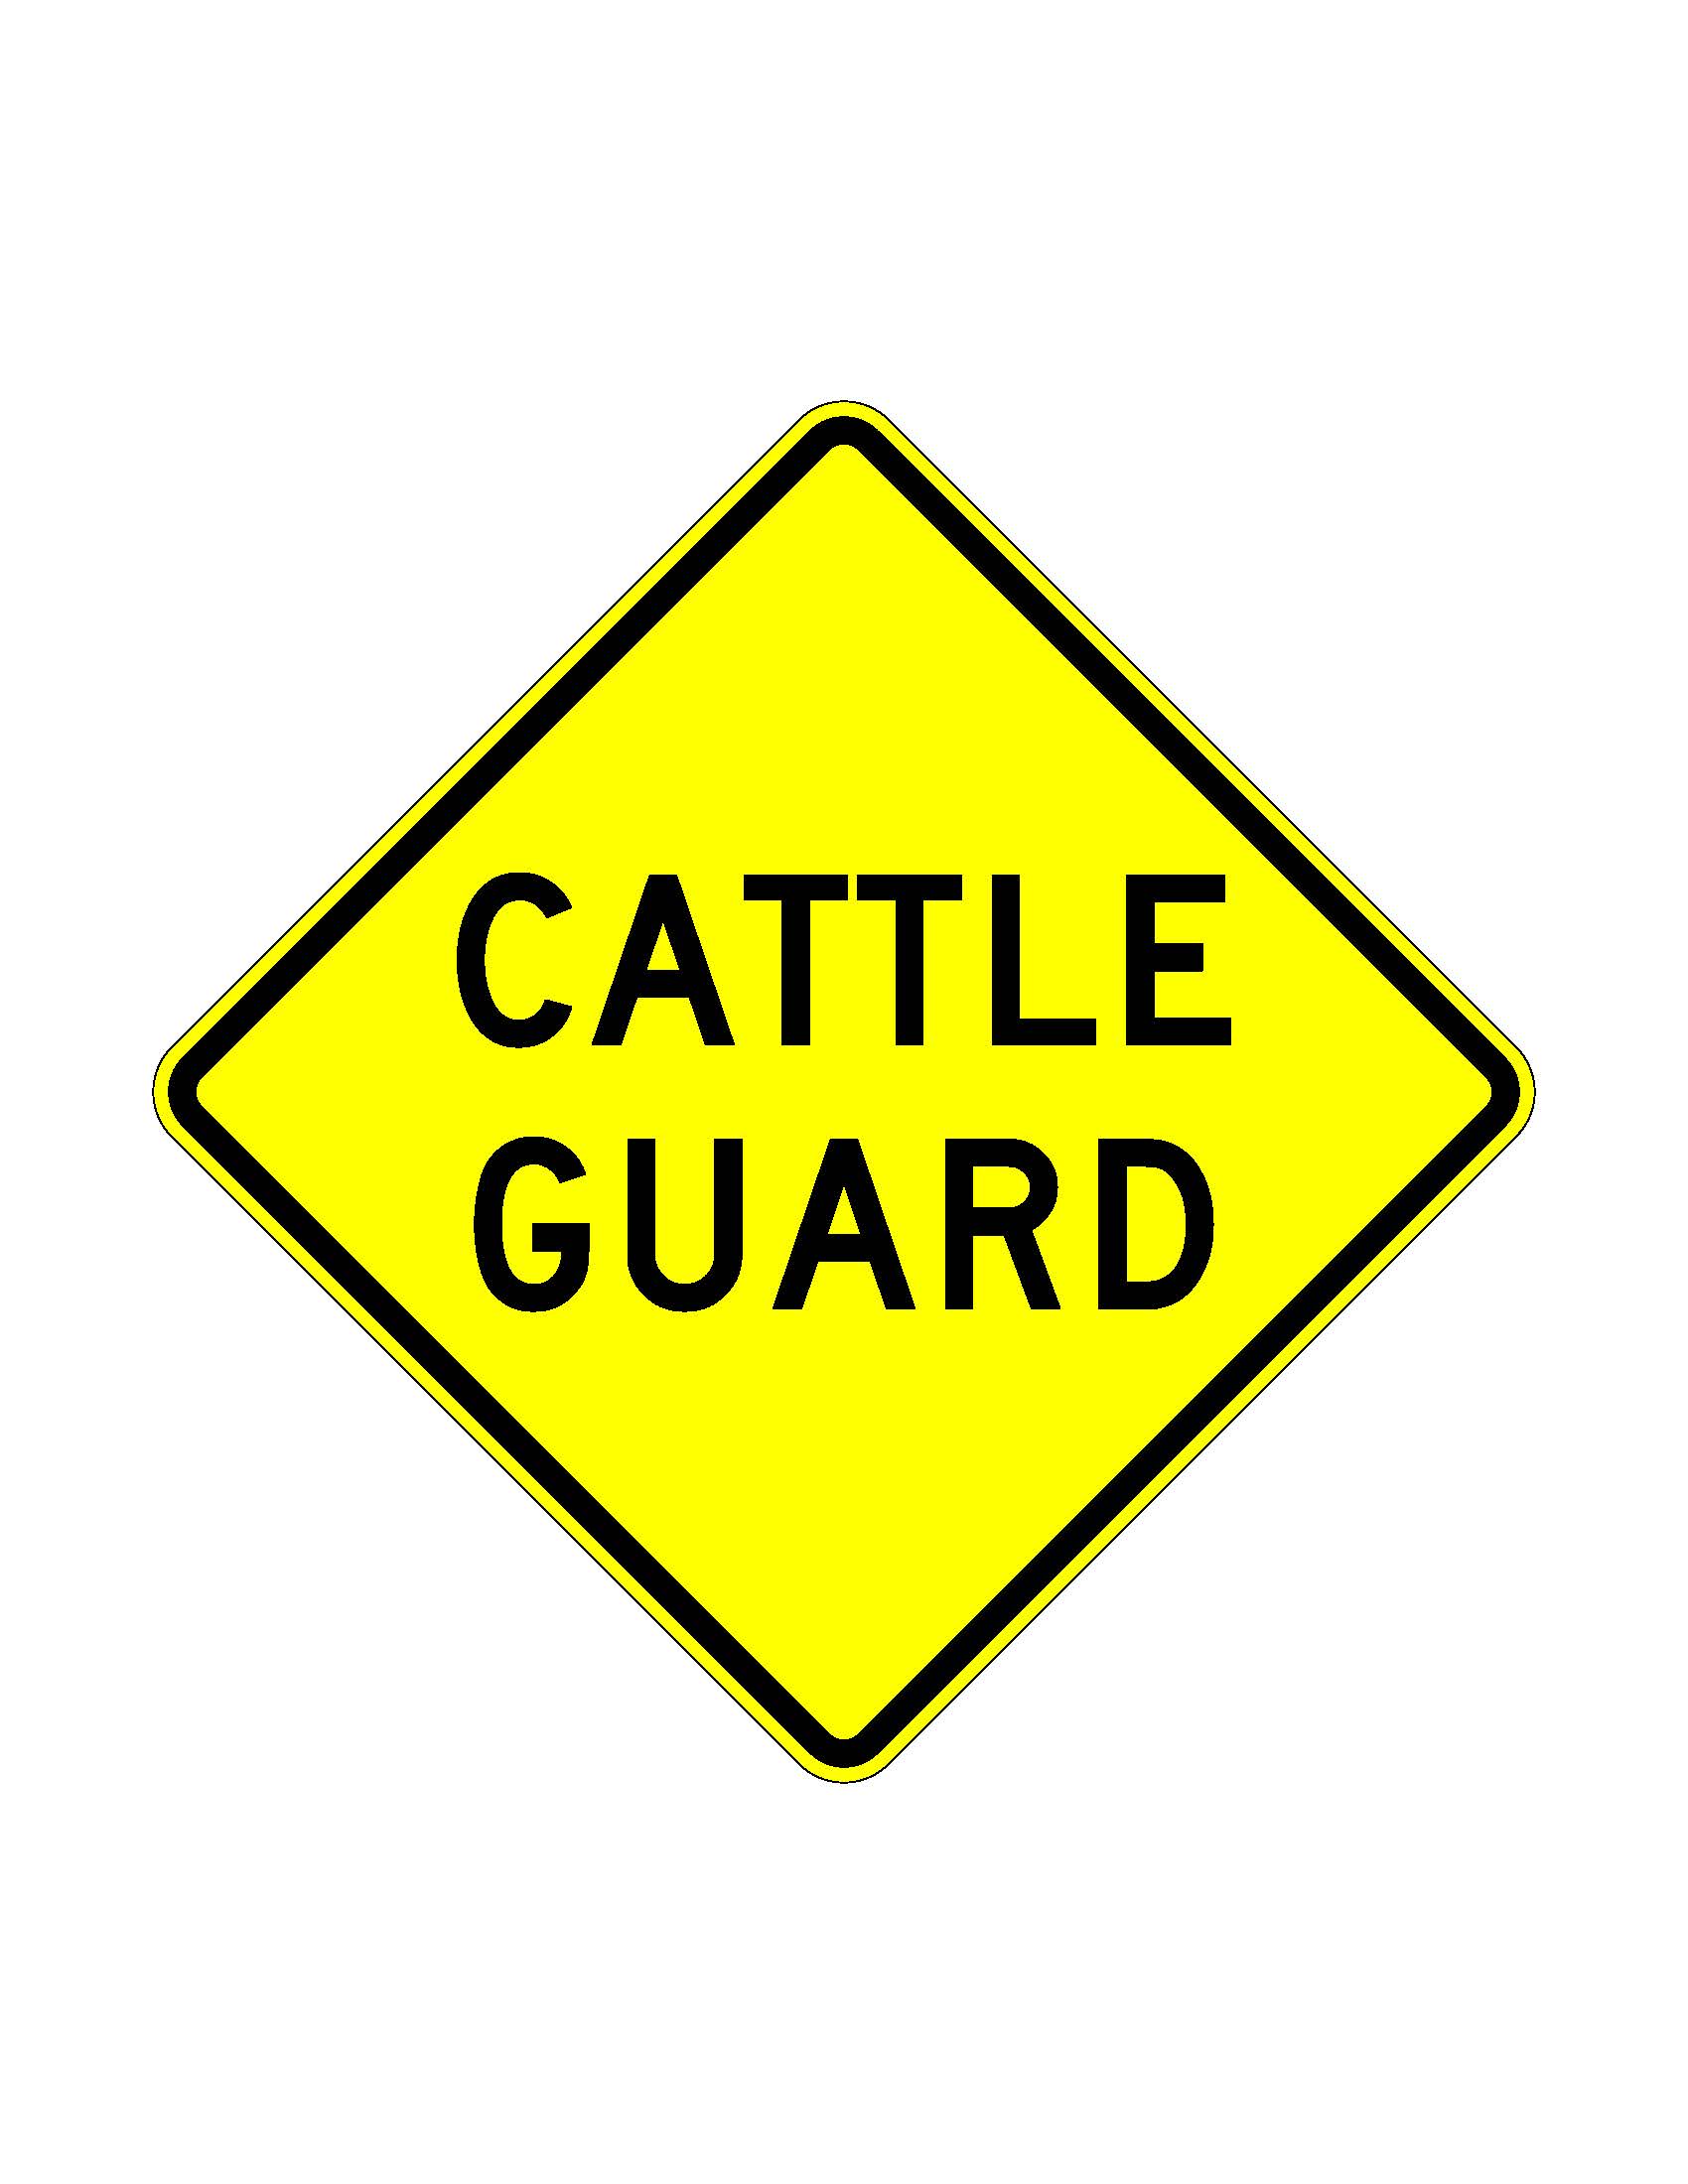 W11-54 Cattle Guard JPEG detail image